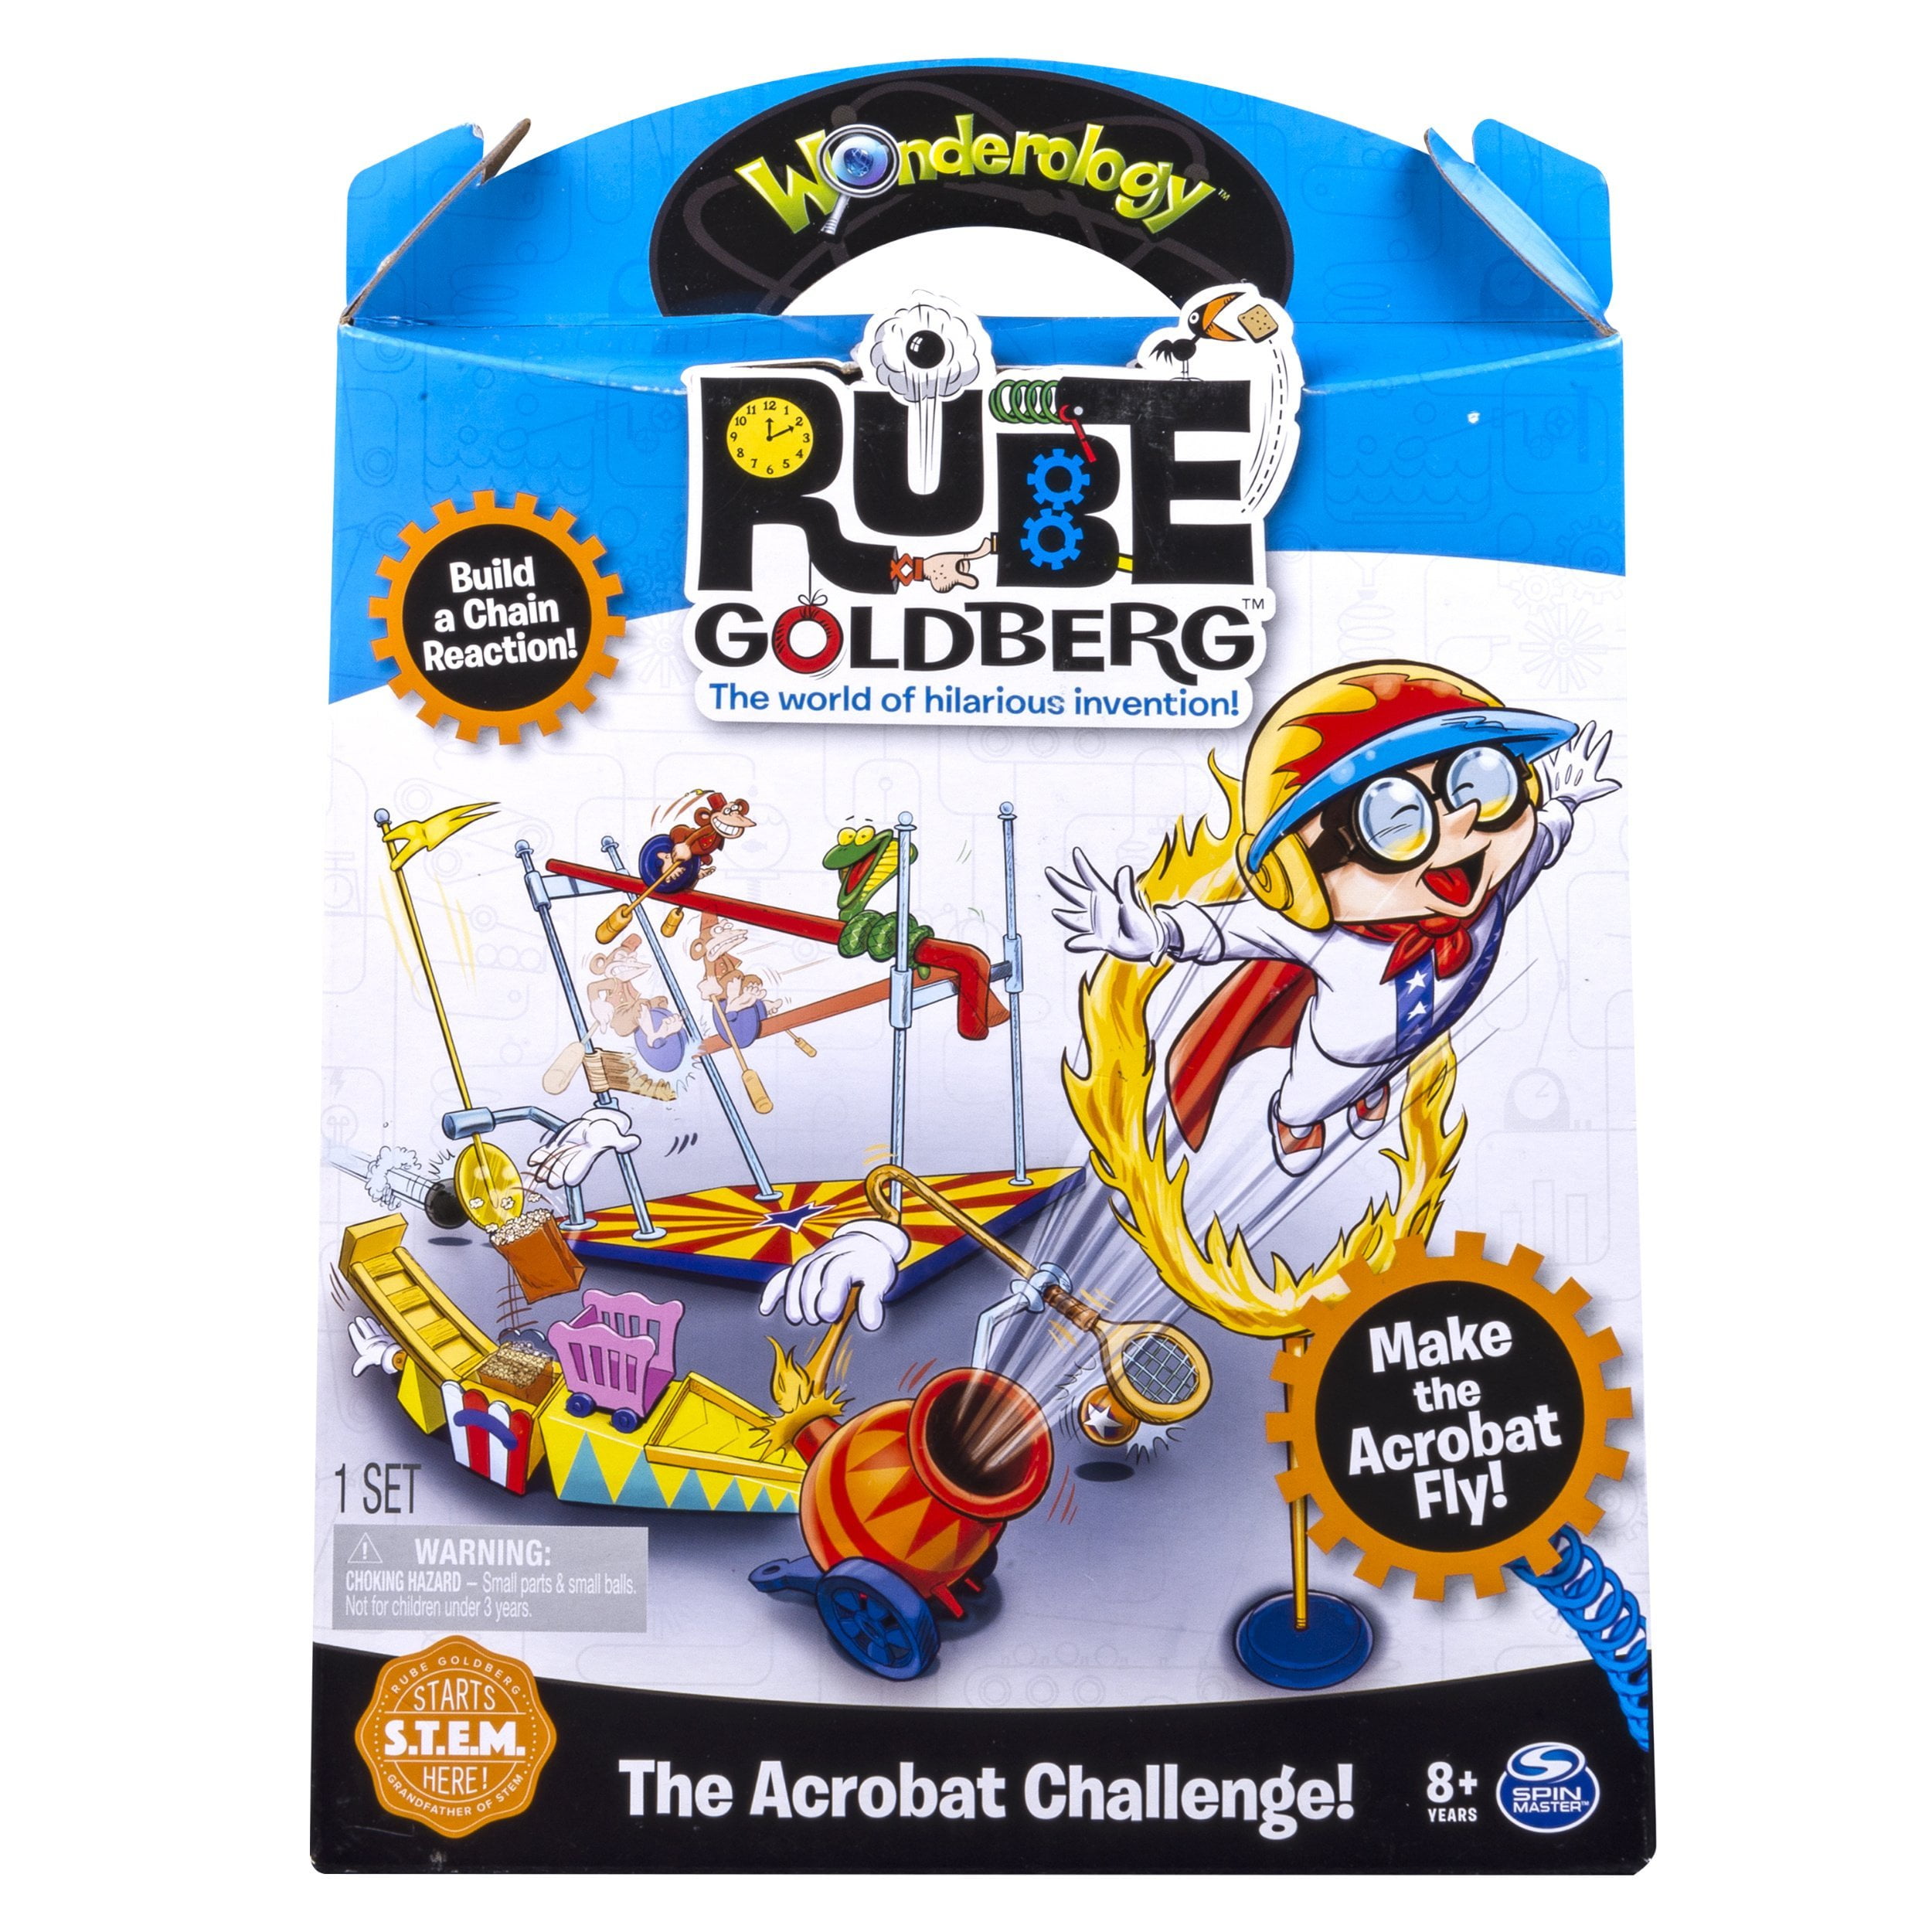 The Acrobat Challenge Rube Goldberg Chain Reaction STEM Toy by Wonderology NIB 